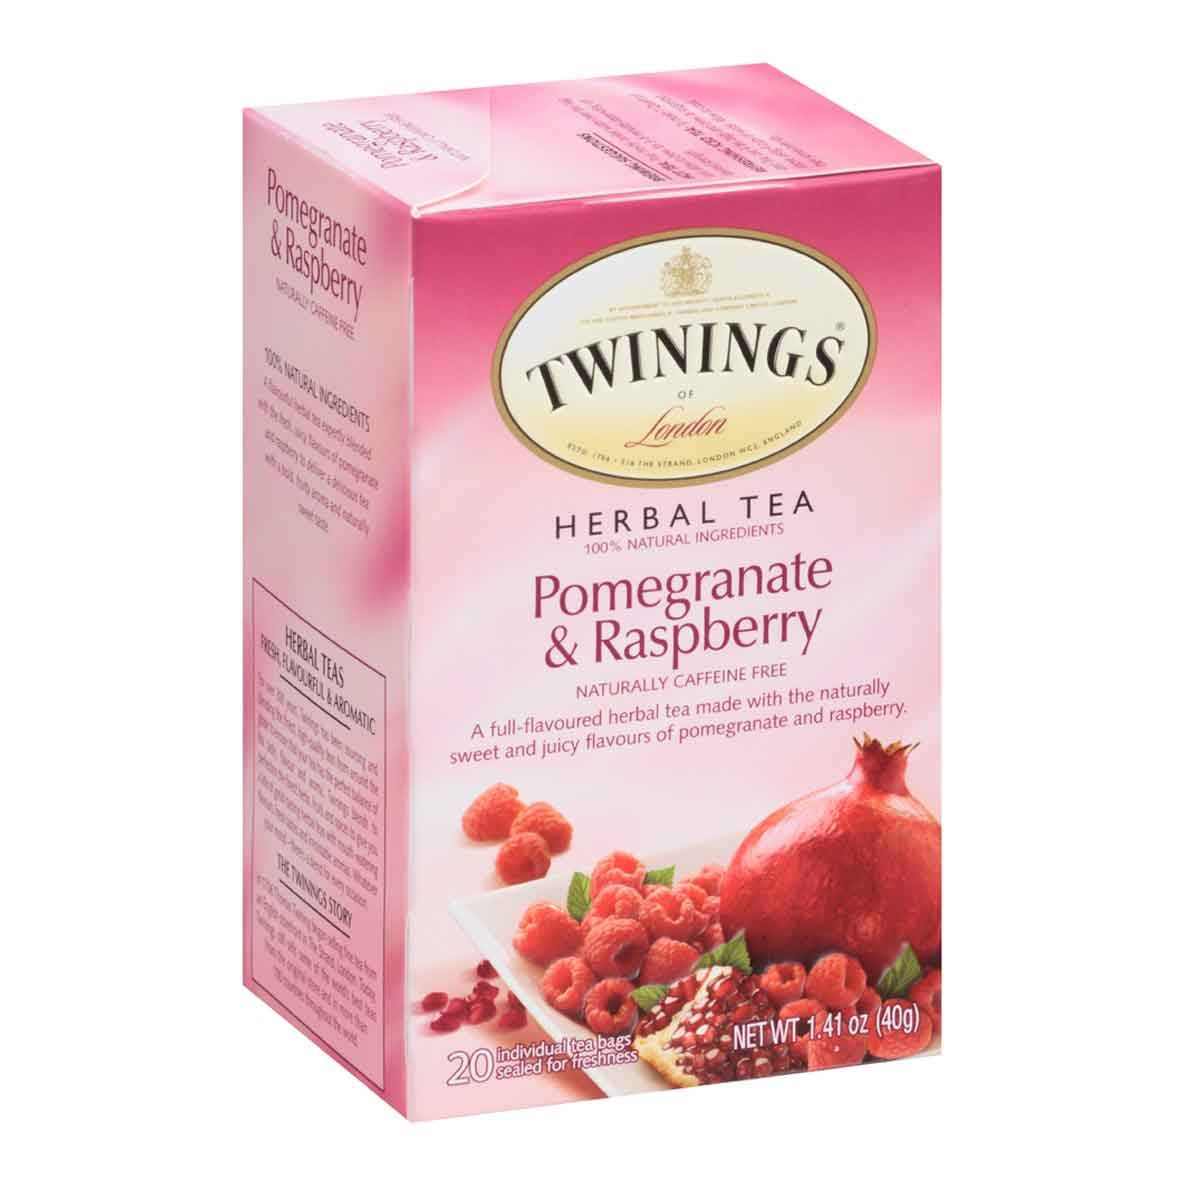 Twining Herbal Tea Pomegranate & Raspberry Naturally Caffeine Free 20 bags